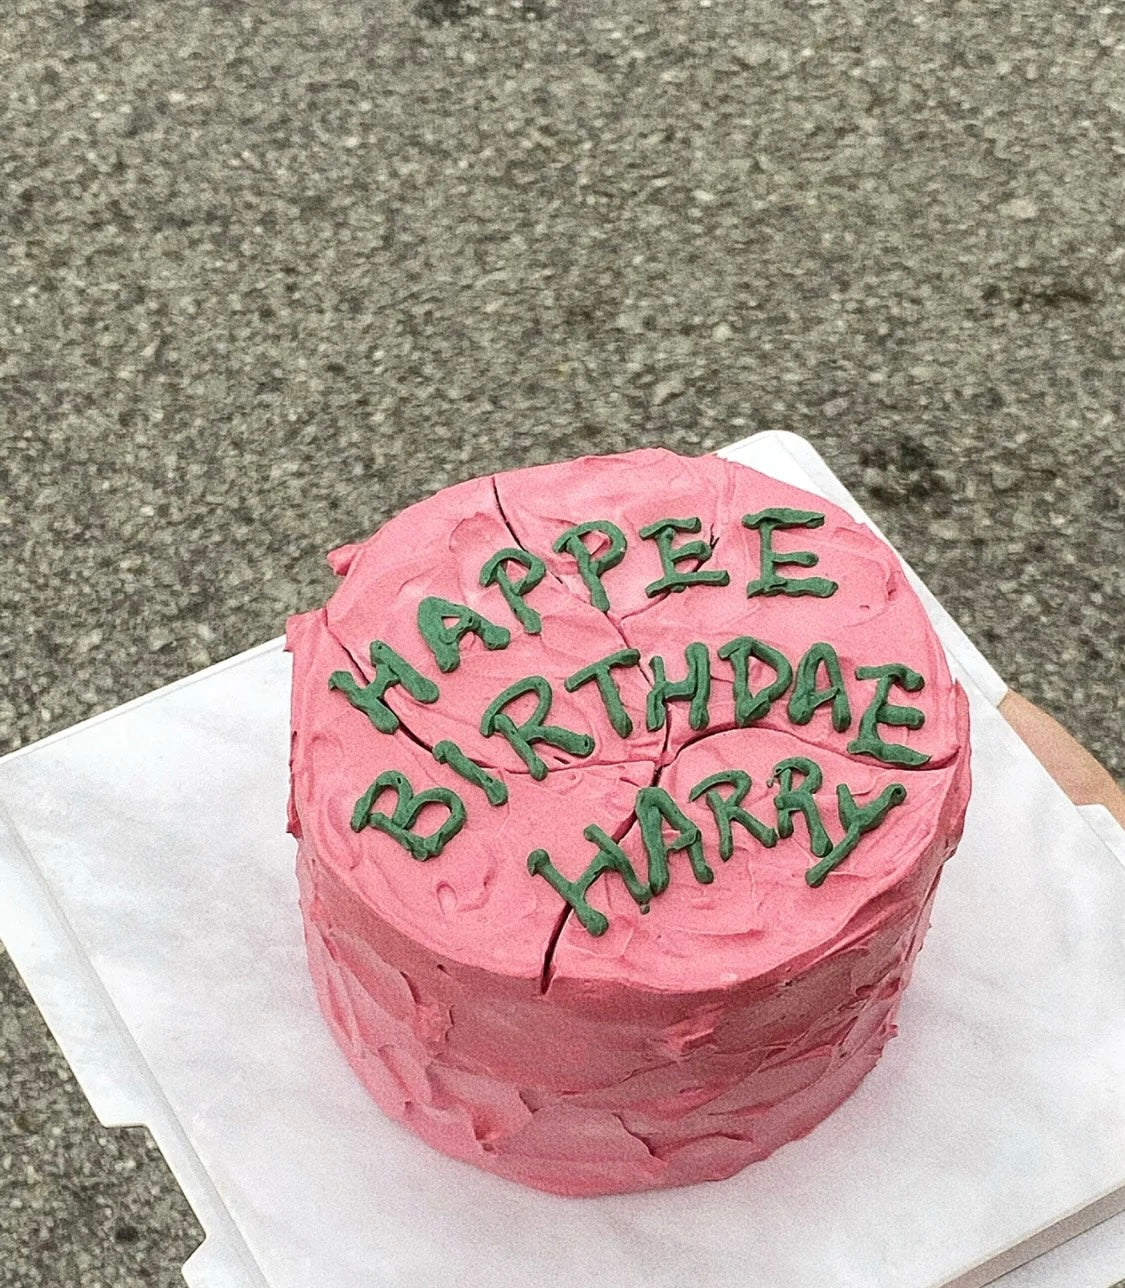 Happee Birthdae Harry Potter Cake